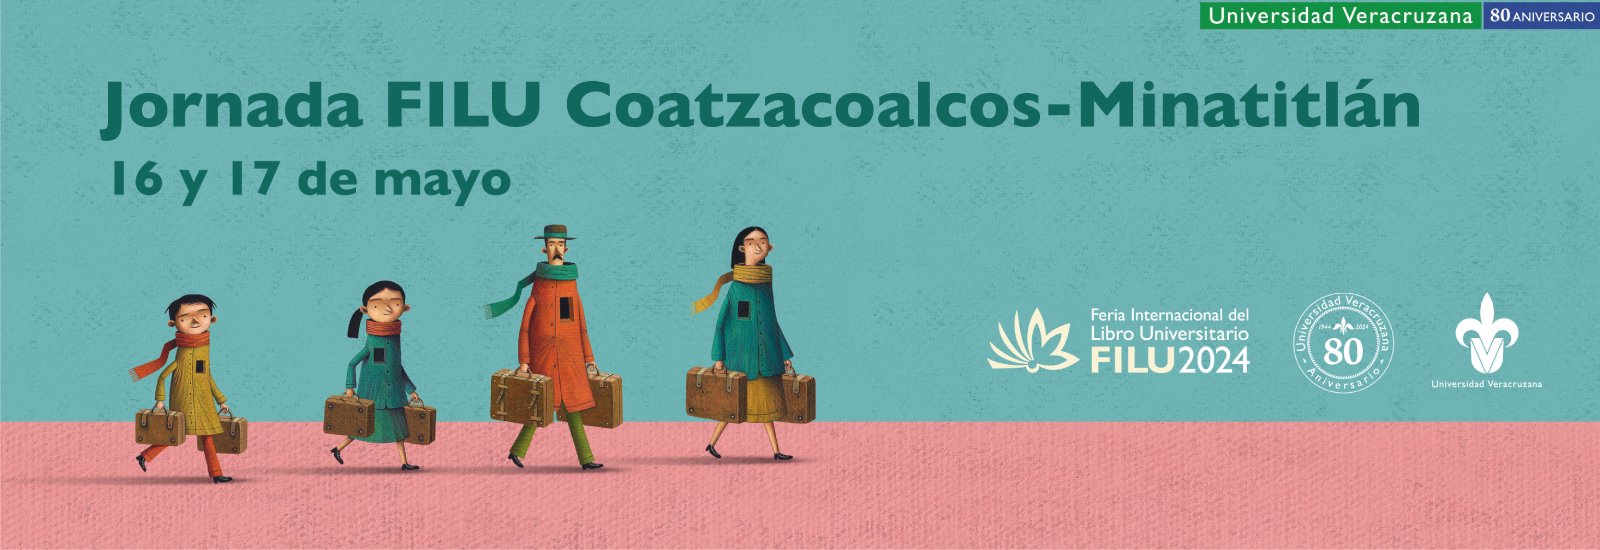 Jornada FILU Coatzacoalcos-Minatitlán16 y 17 de mayo